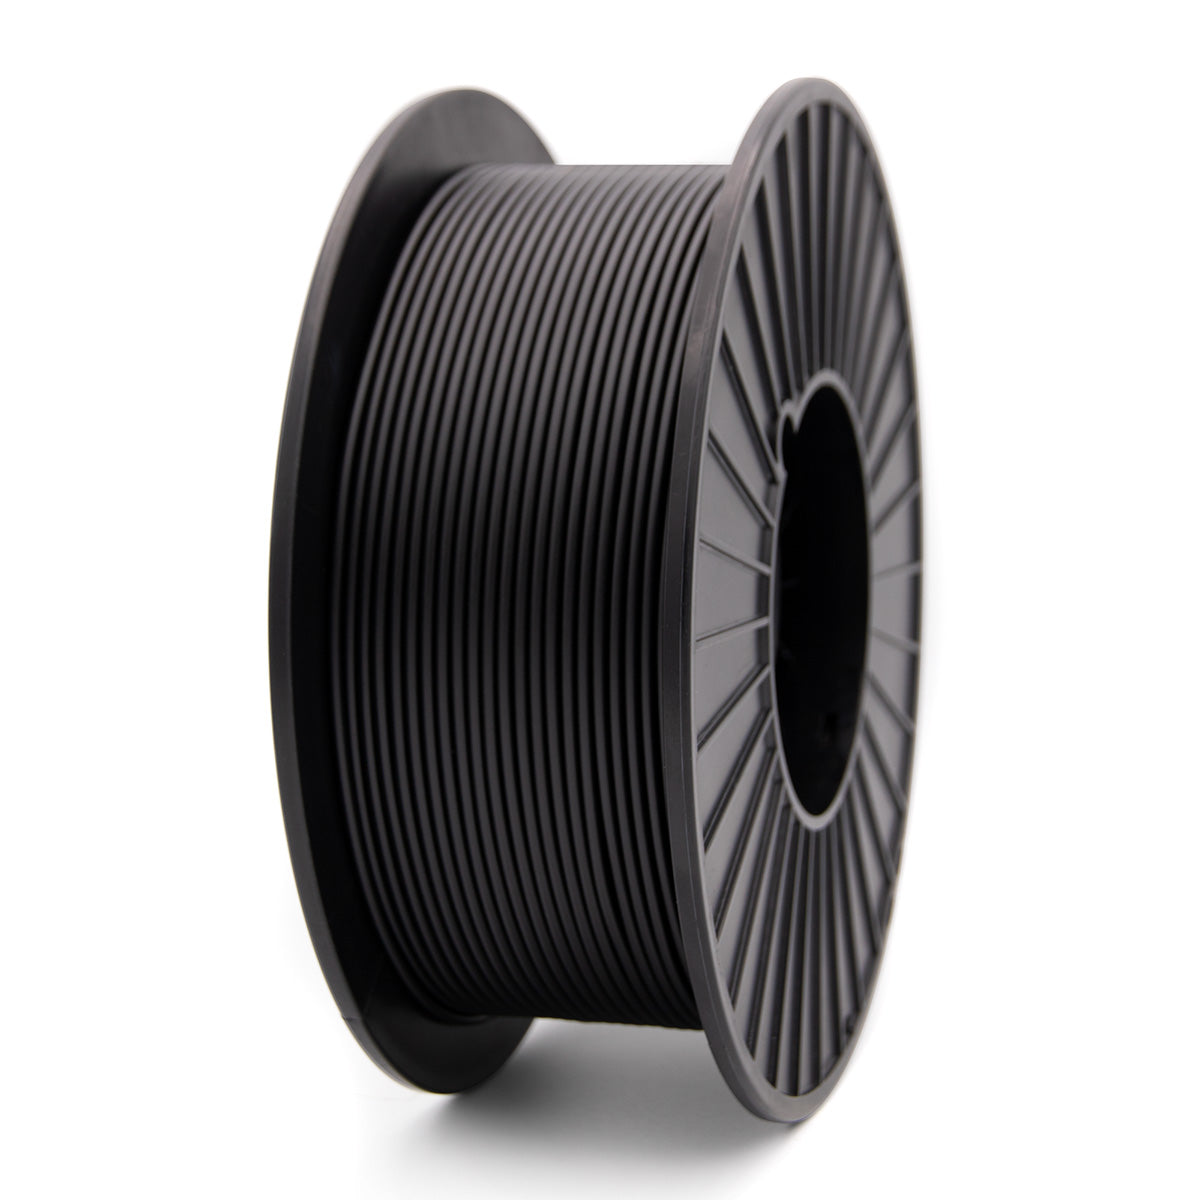 Flame Retardant ABS 3D Printer Filament 1.75mm –